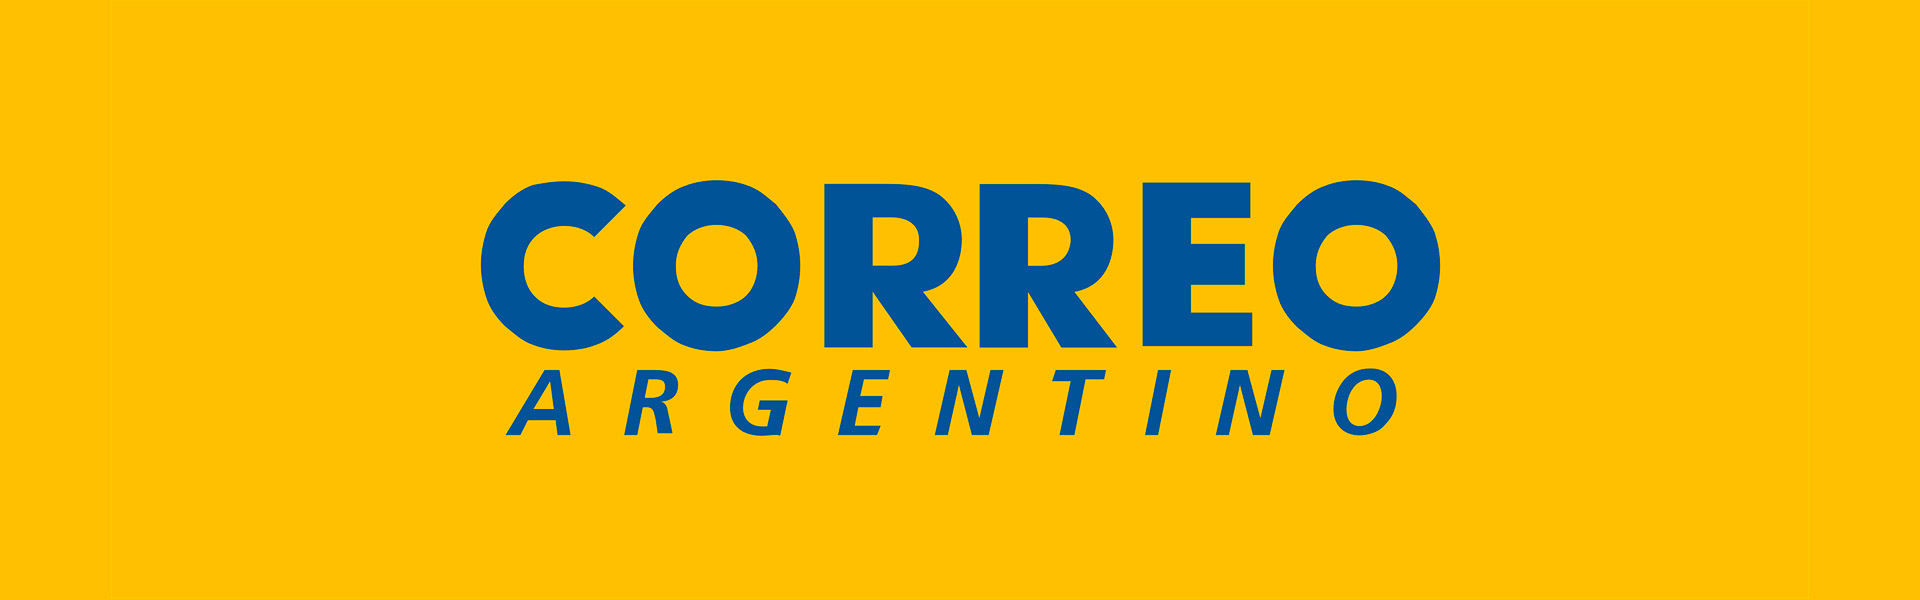 ¿Cómo configurar Correo Argentino para mis envíos? thumbnail